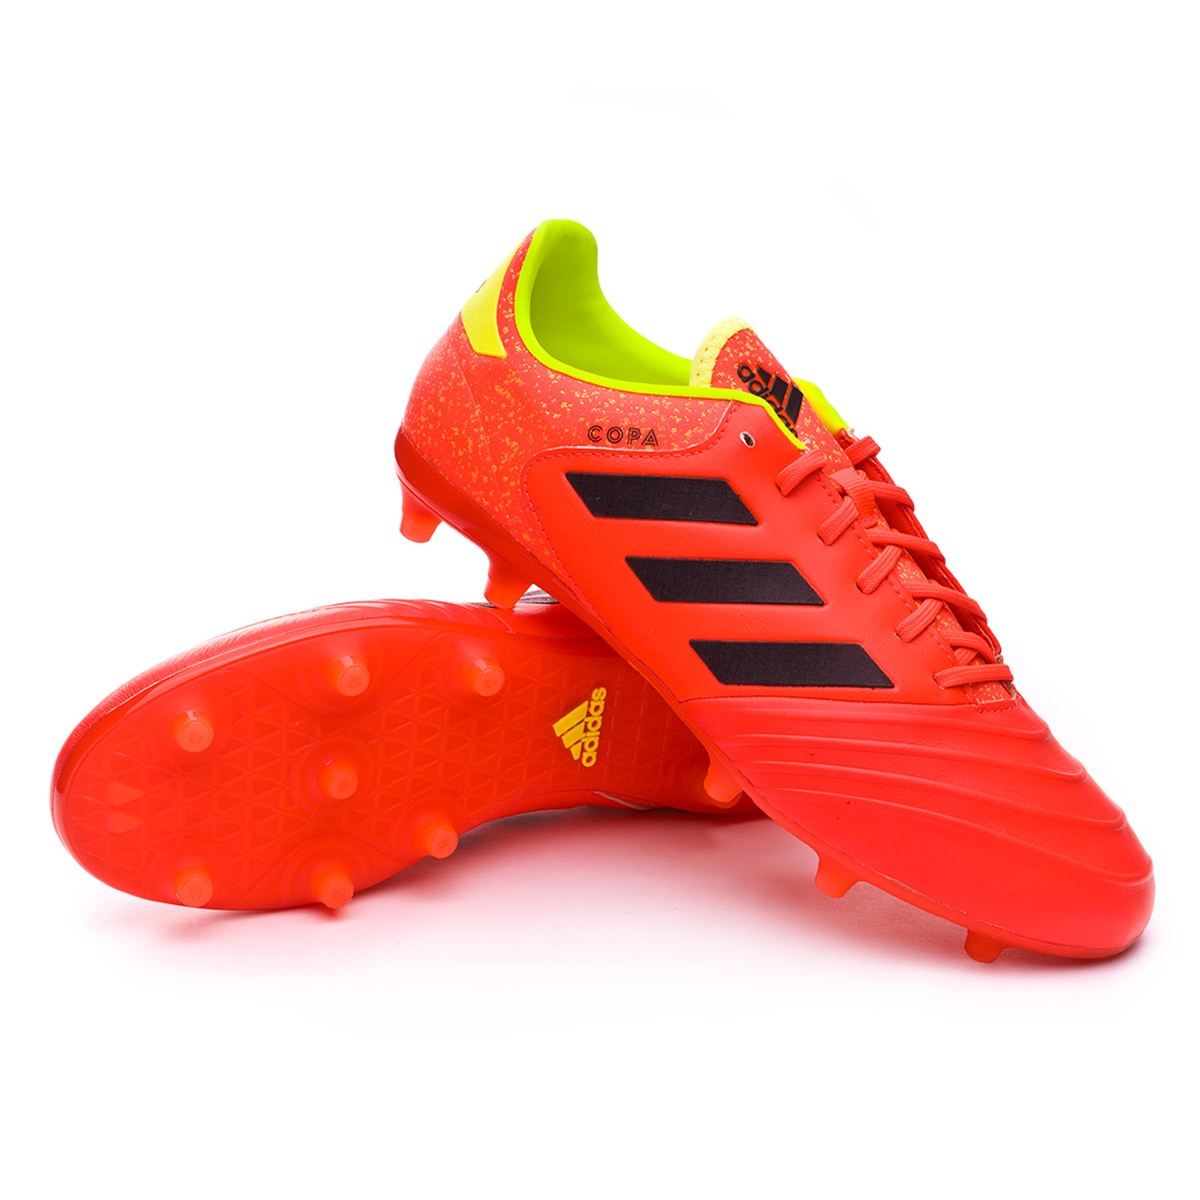 Football Boots adidas Copa 18.2 FG 